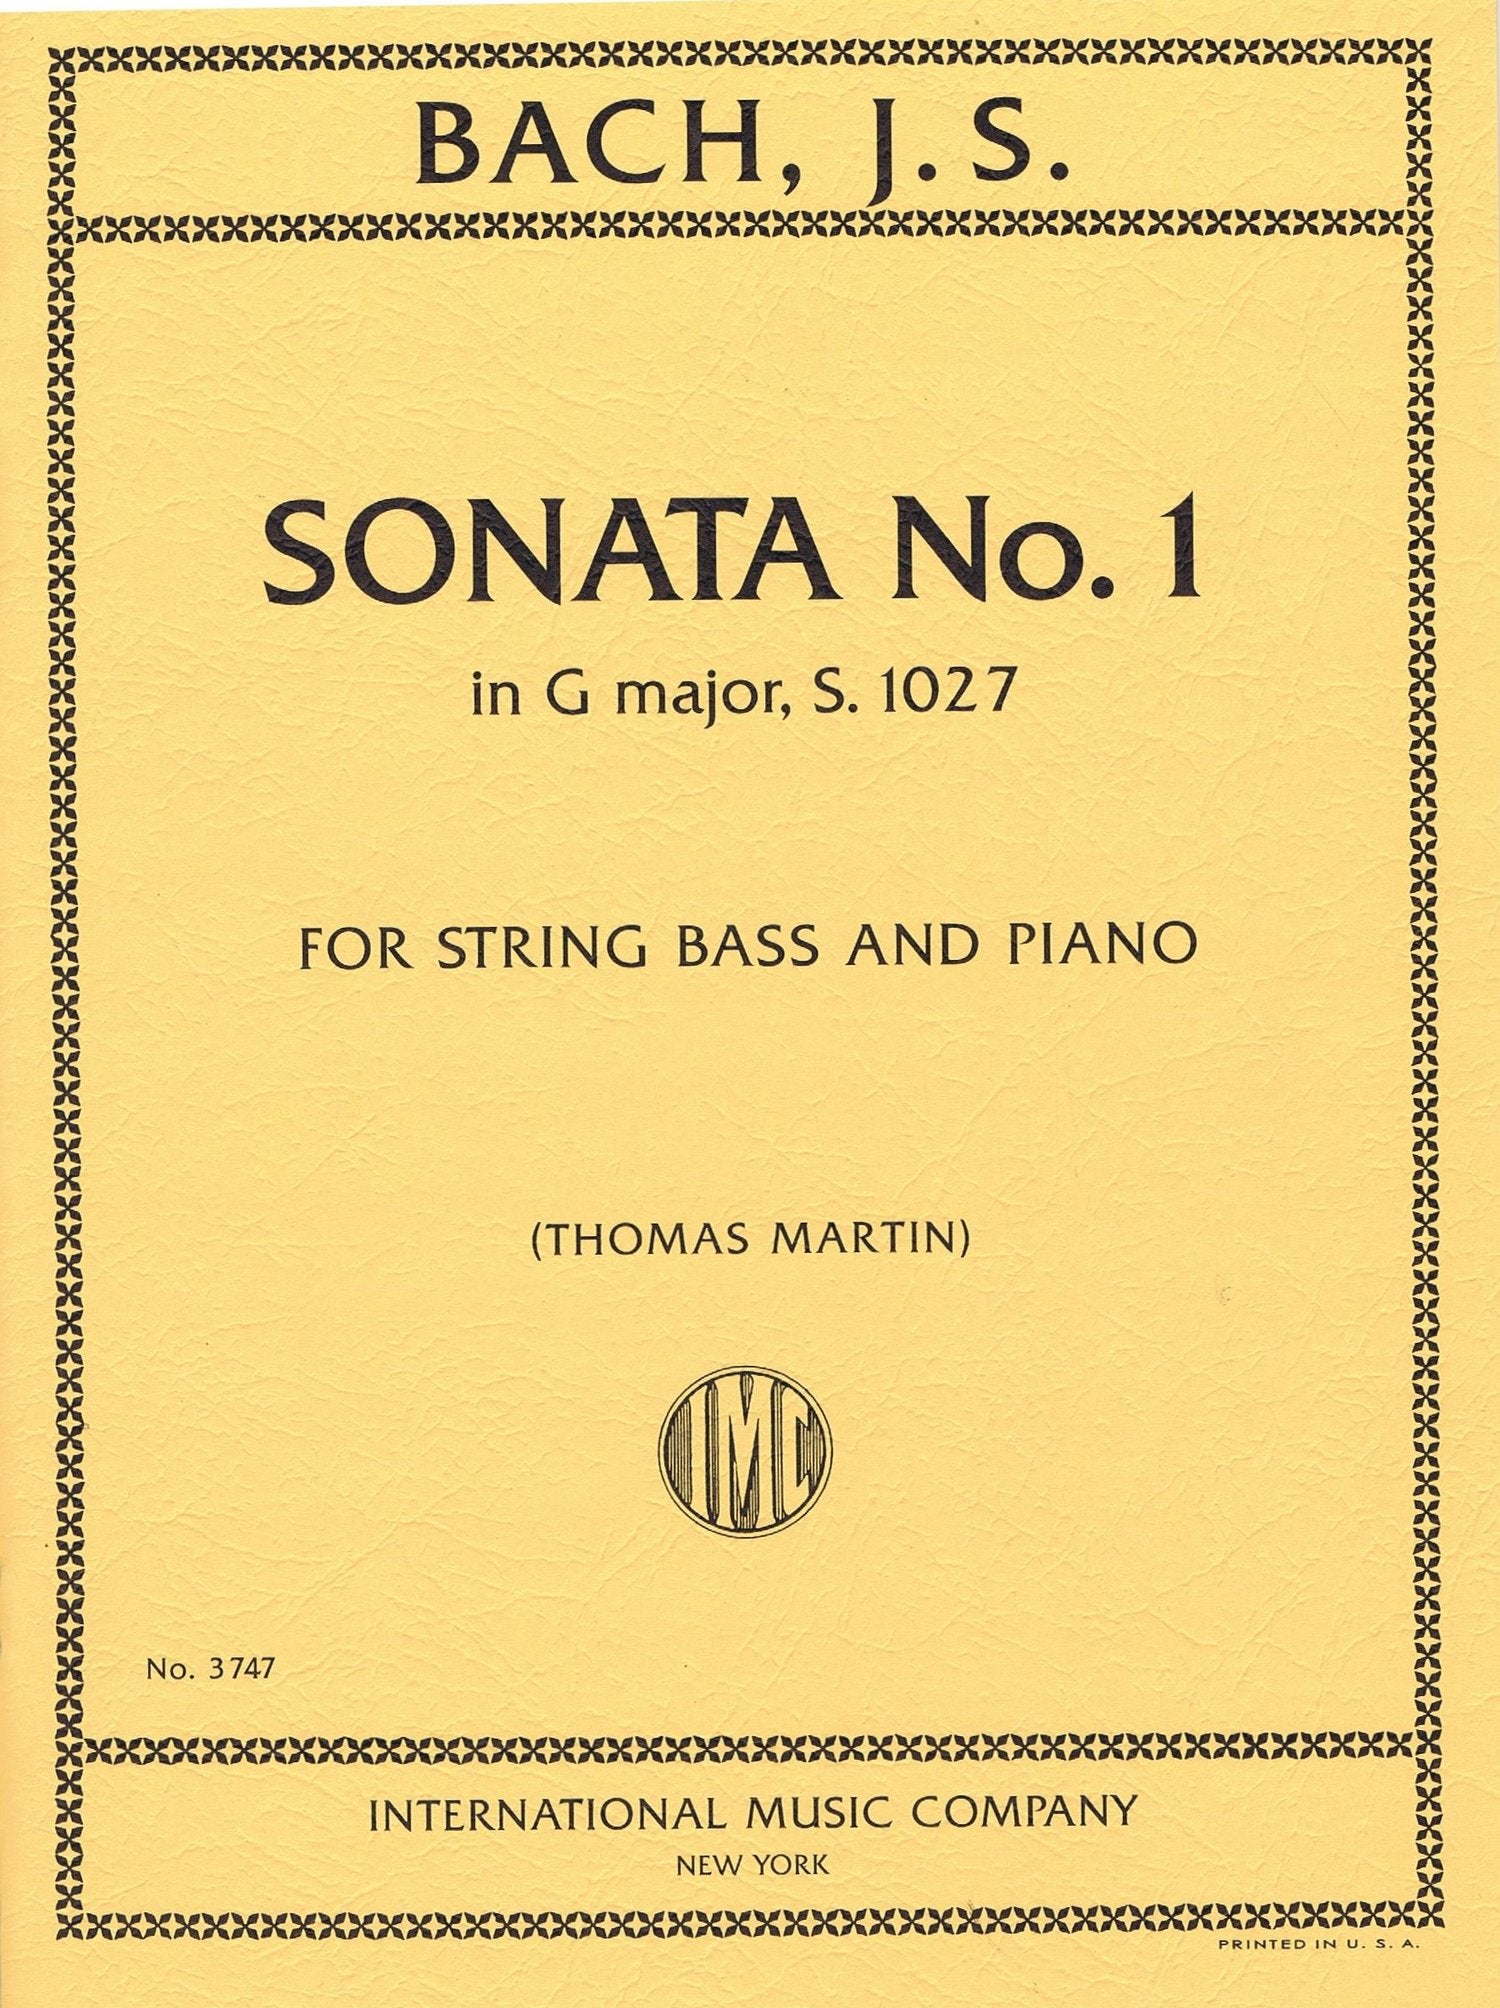 Double Bass Books - Sonata